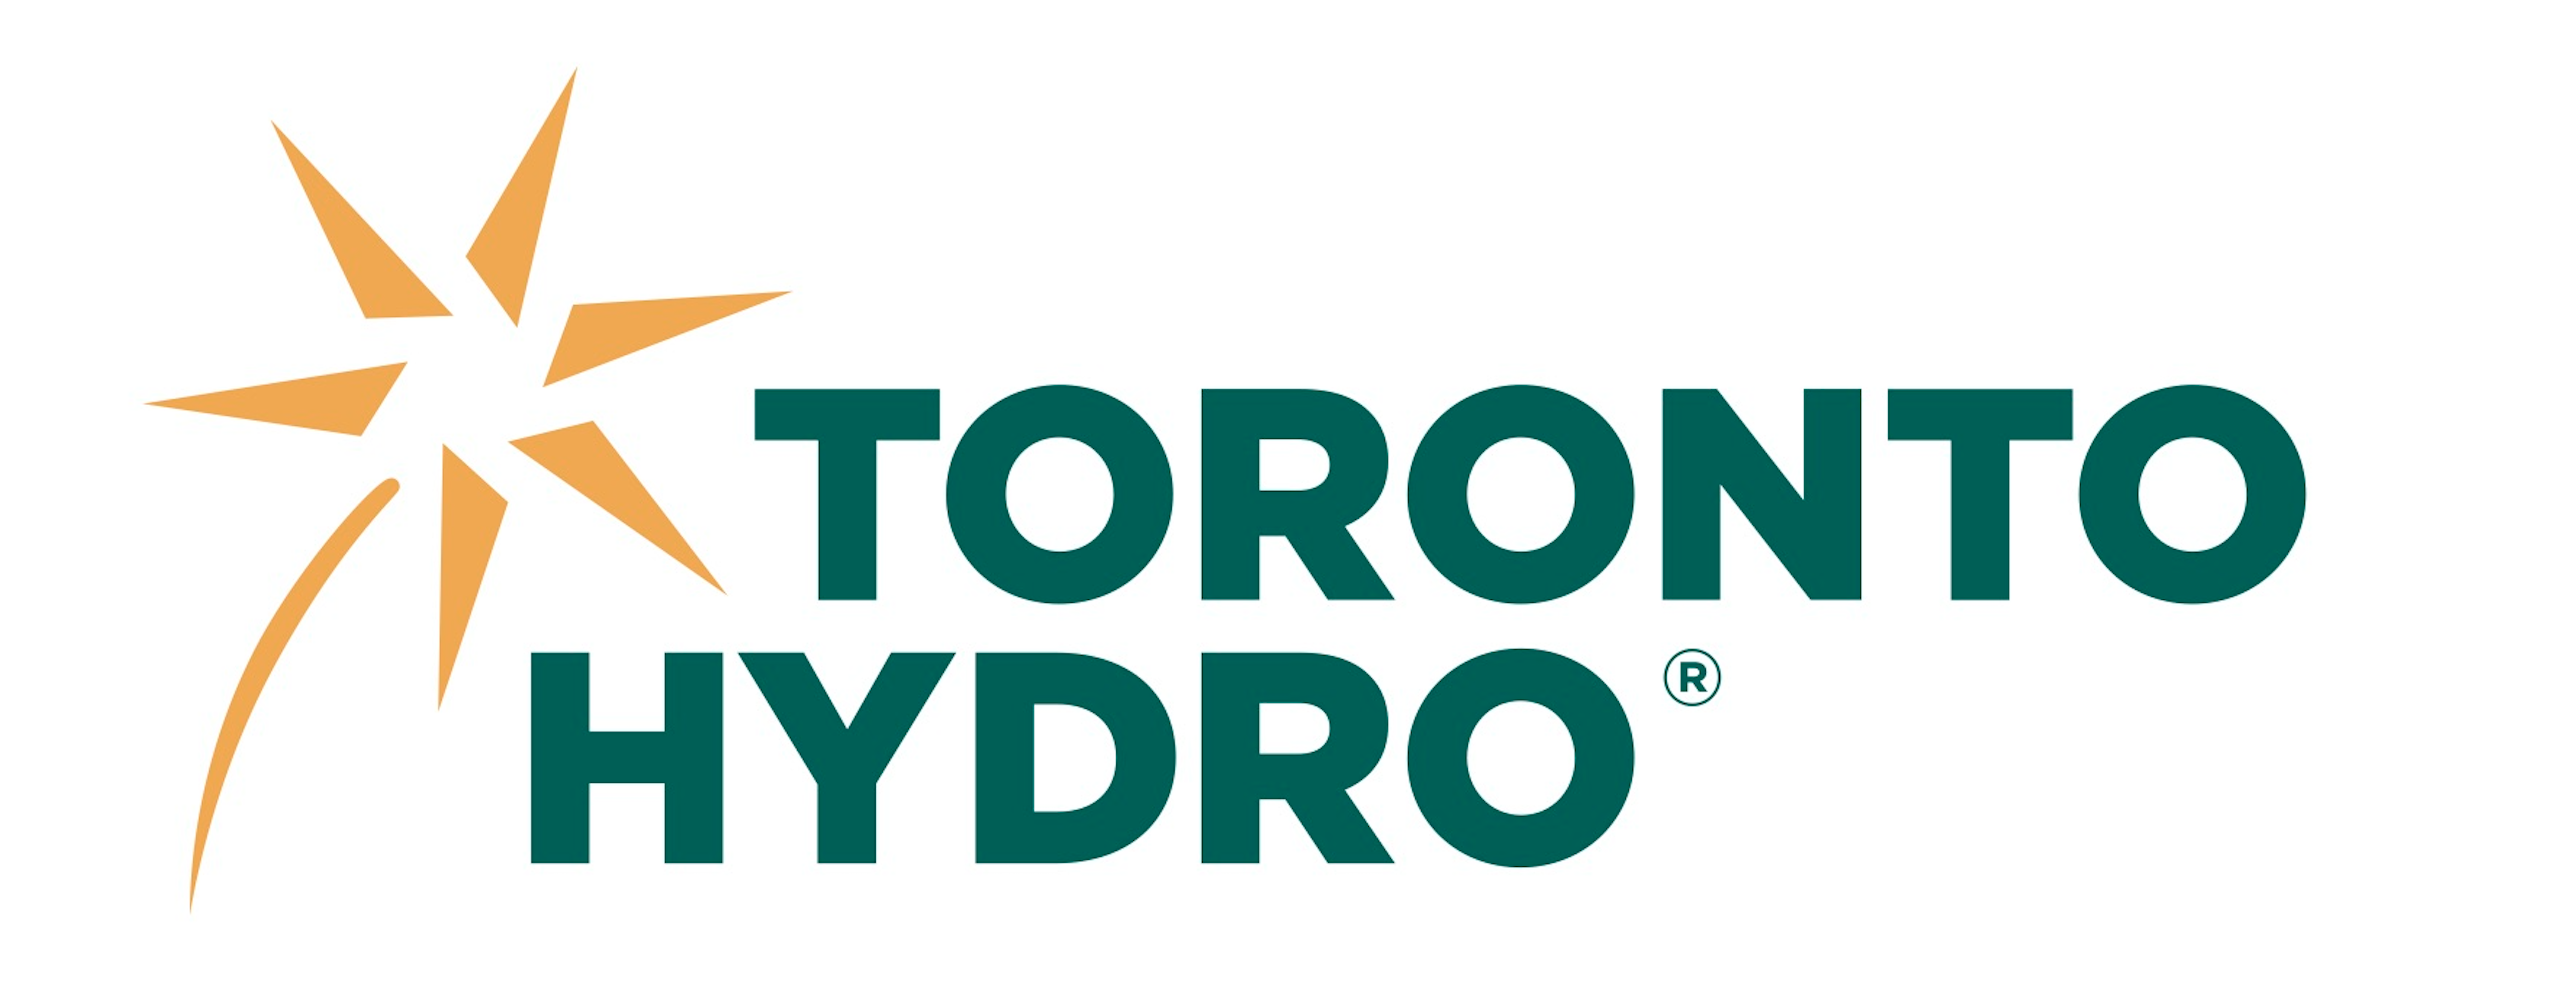 https://ilead.engineering.utoronto.ca/files/2020/11/toronto-hydro-logo.png